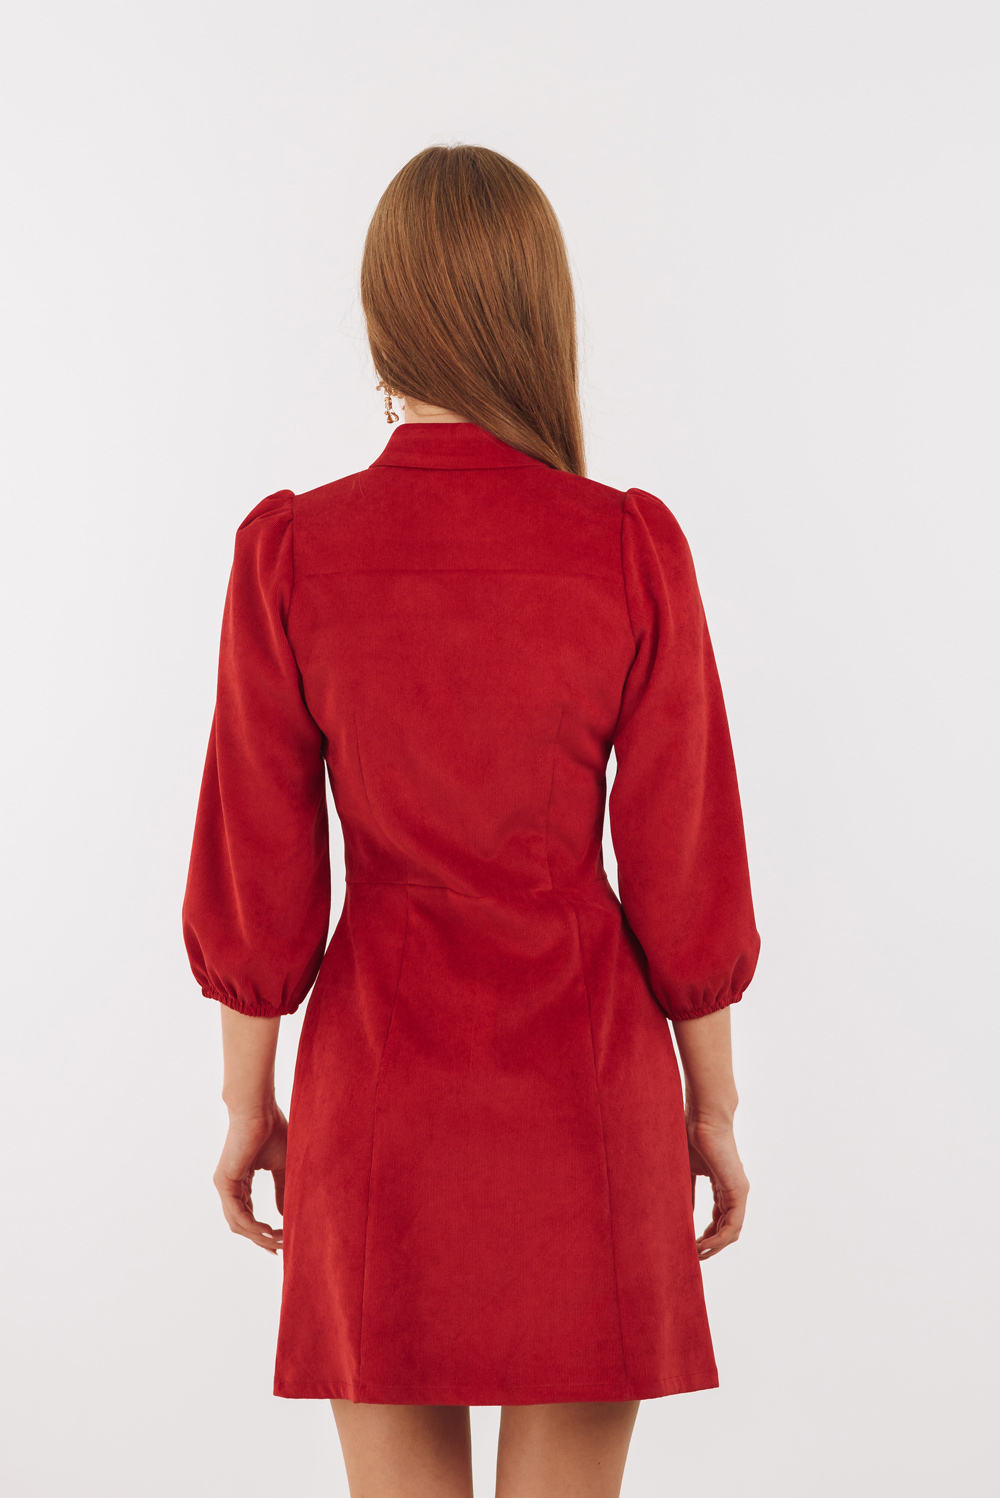 Red corduroy dress